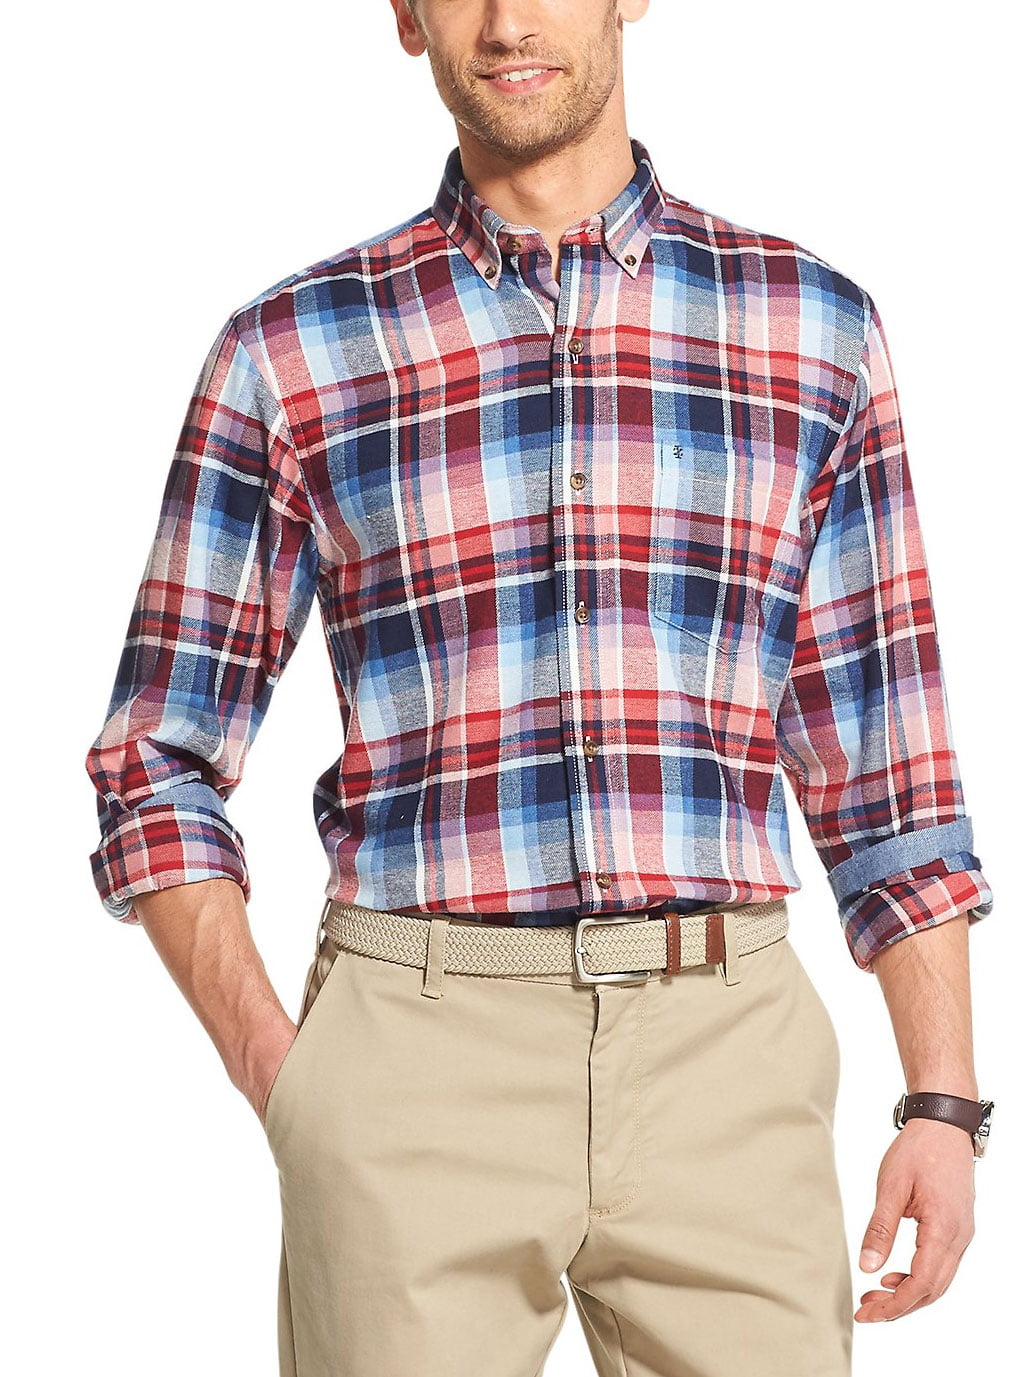 IZOD - Izod Men's Long Sleeve Plaid Flannel Shirt, Real Red, Medium ...